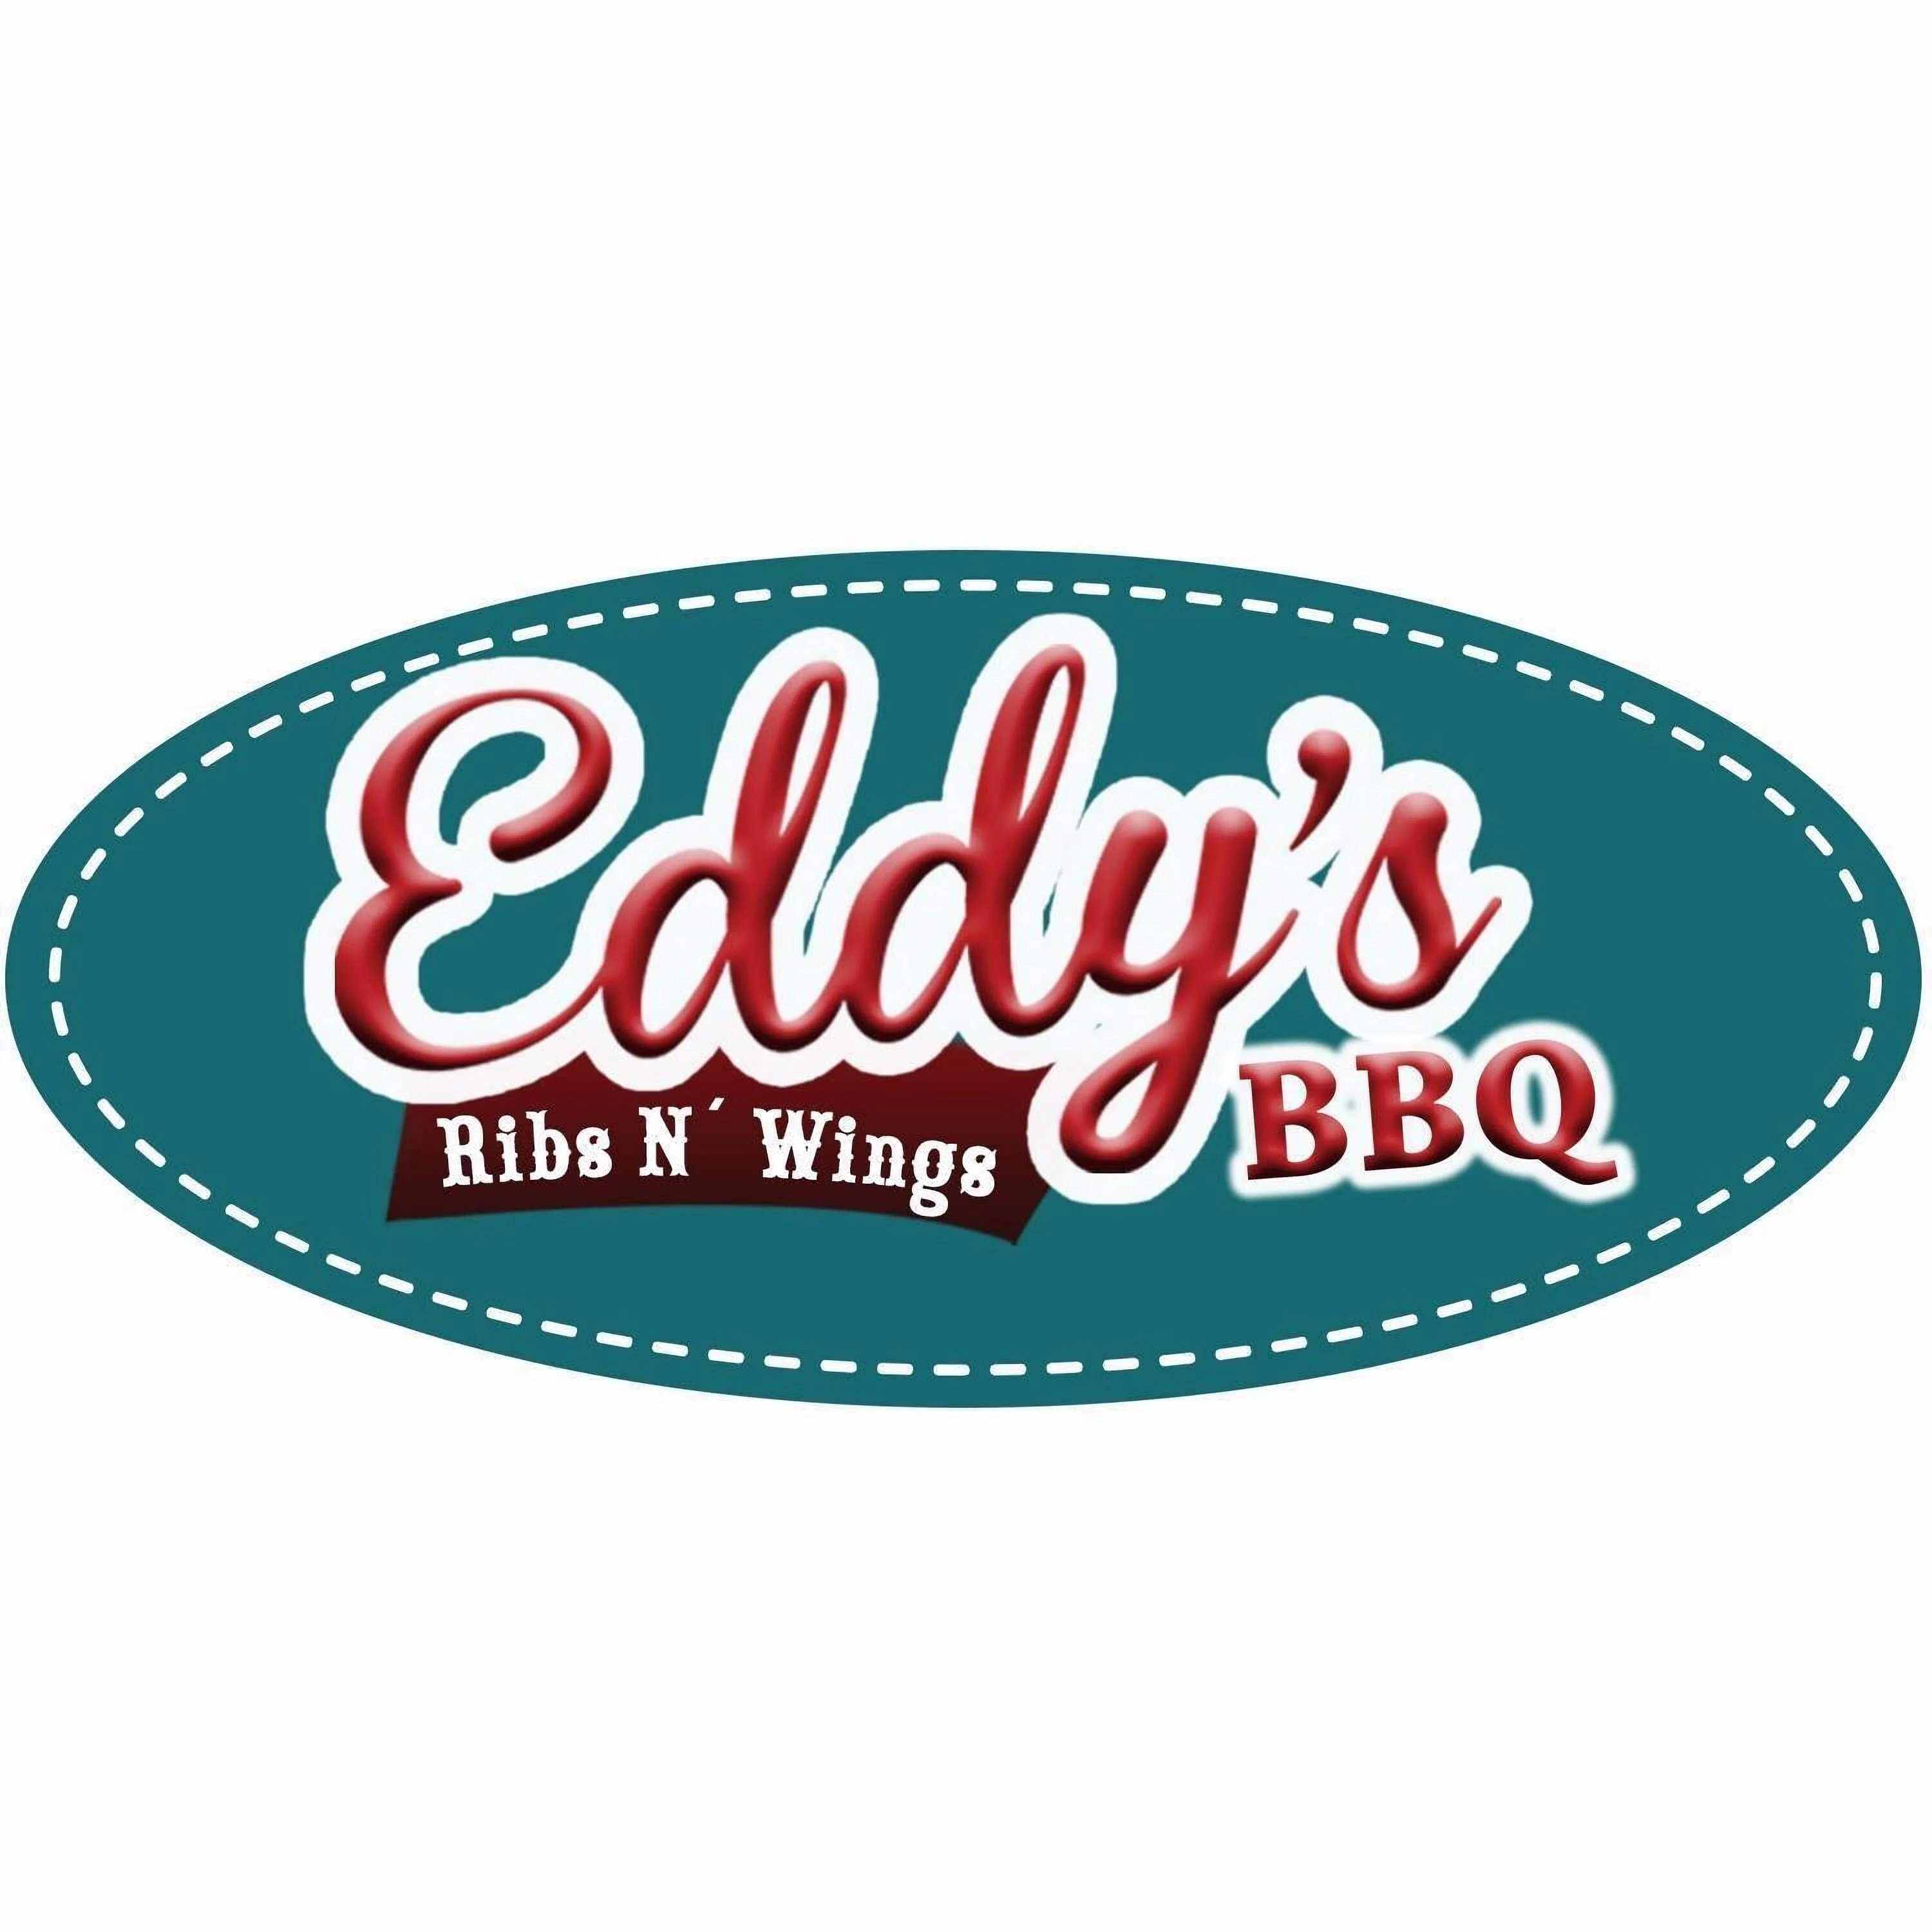 Restaurantes-eddys-bbq-17116